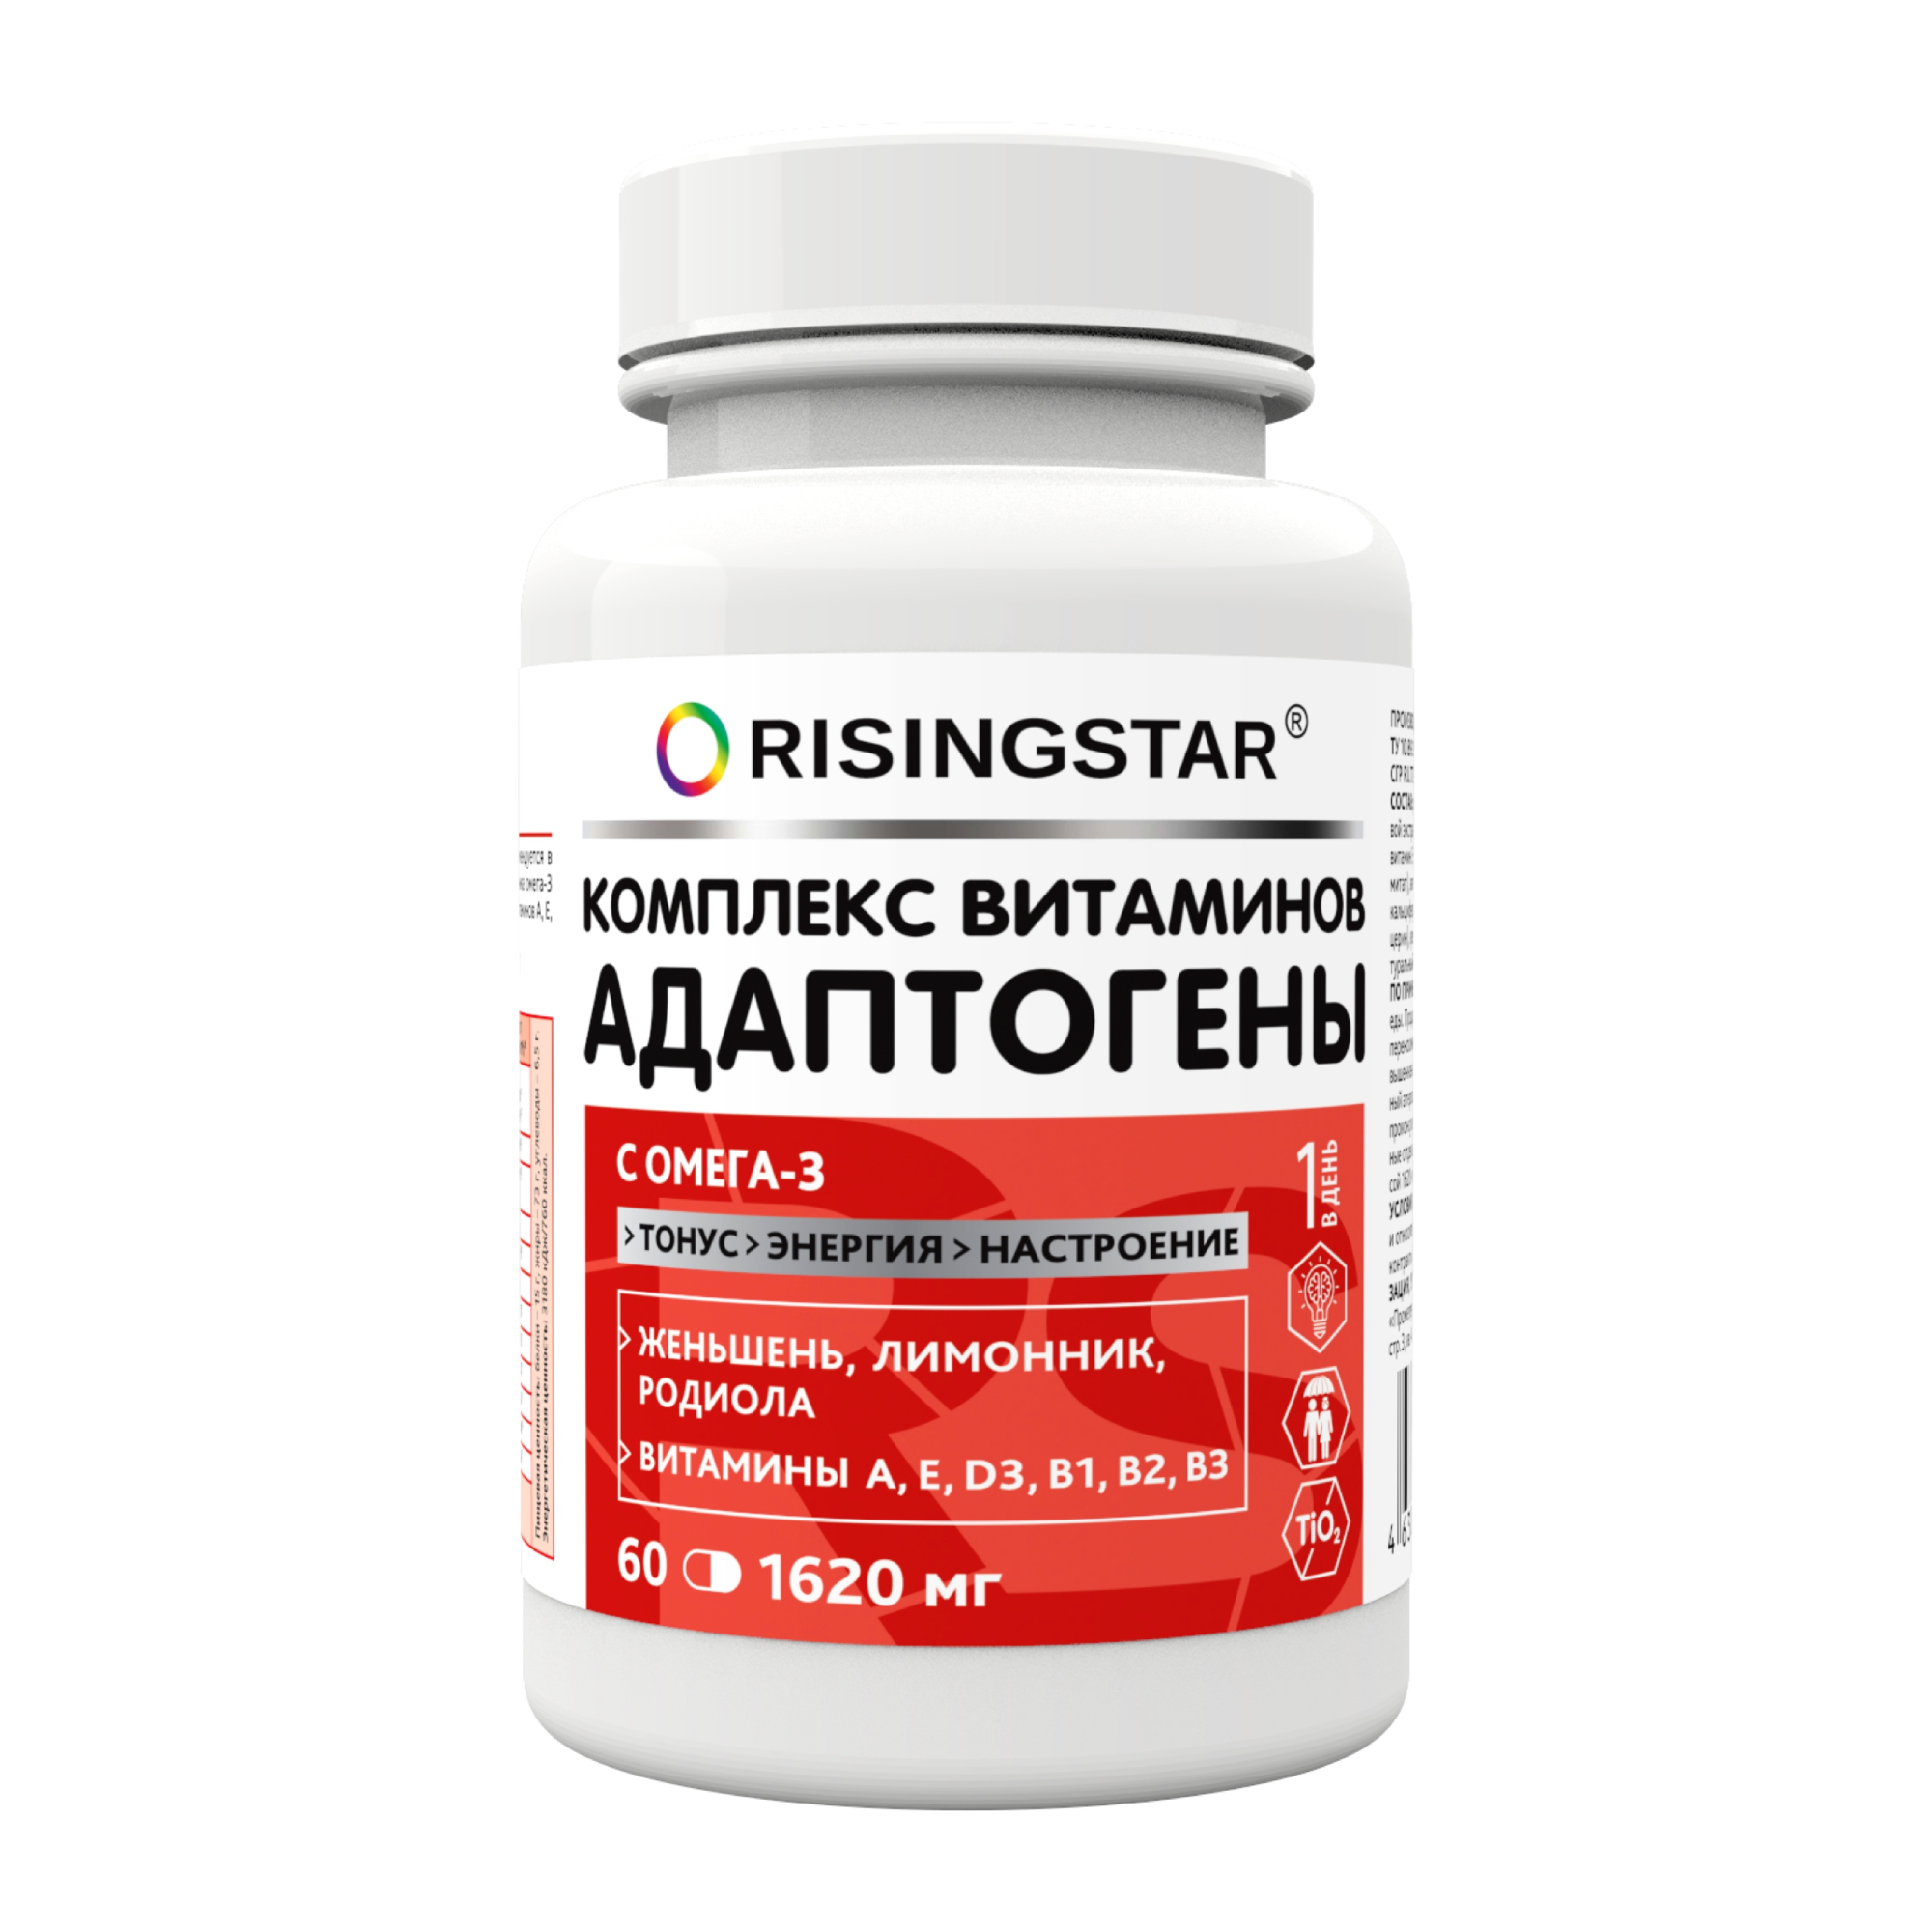 БАД Risingstar комплекс витаминов адаптогены с омега-3 60 таблеток, 100 г бад risingstar комплекс витаминов адаптогены с омега 3 60 таблеток 100 г